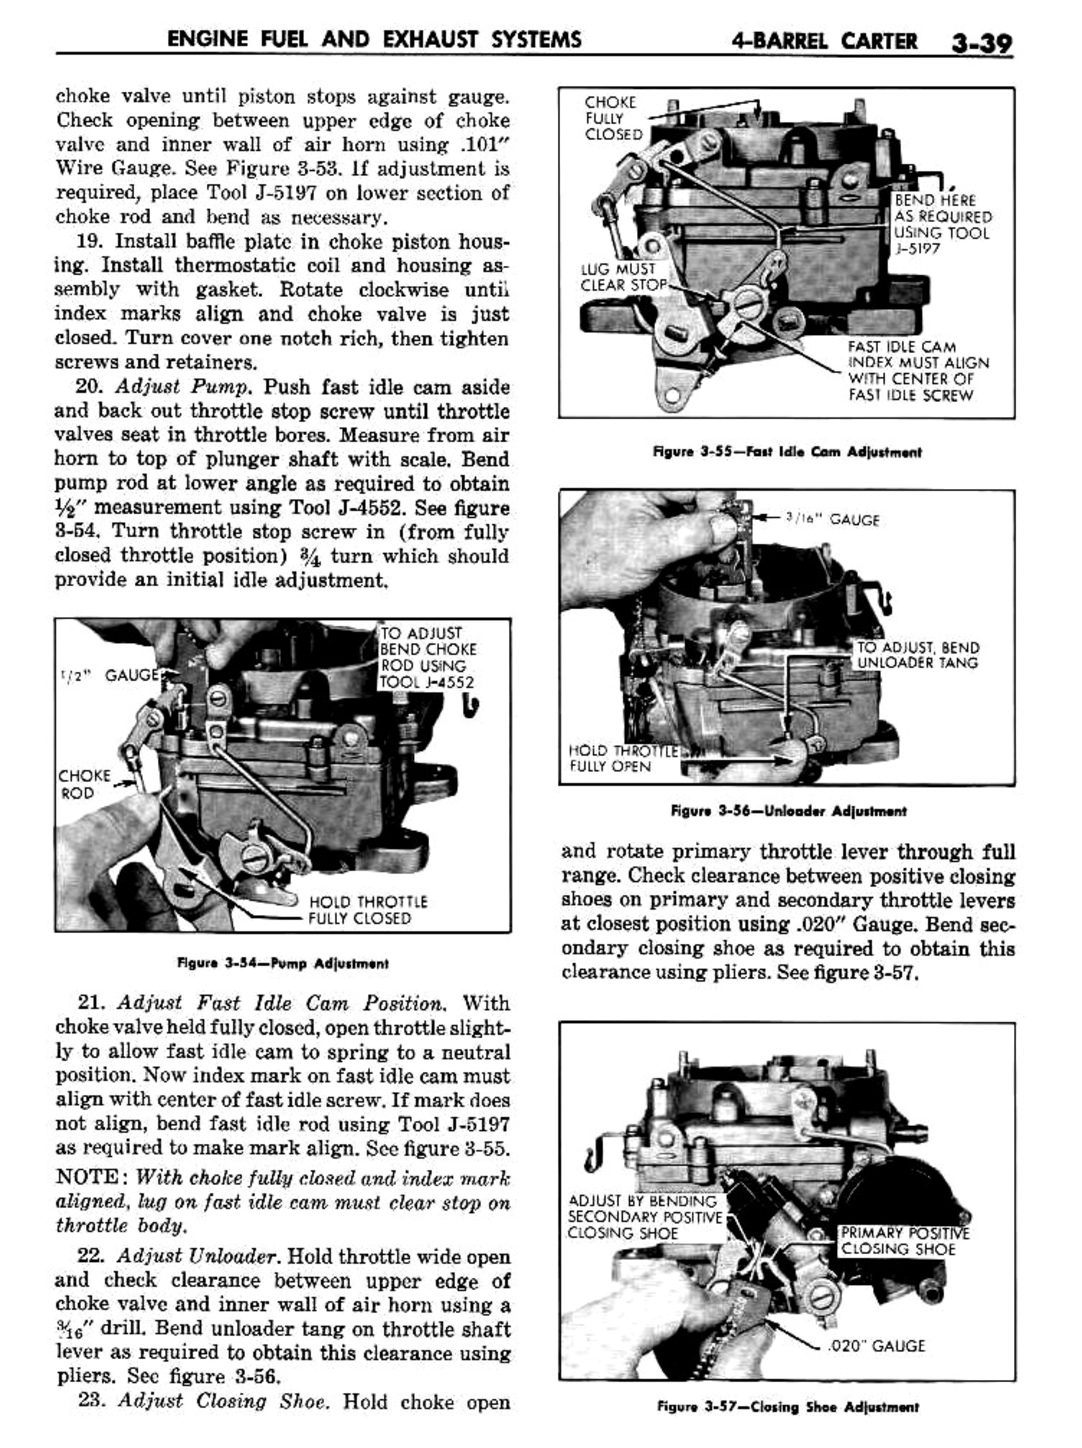 n_04 1960 Buick Shop Manual - Engine Fuel & Exhaust-039-039.jpg